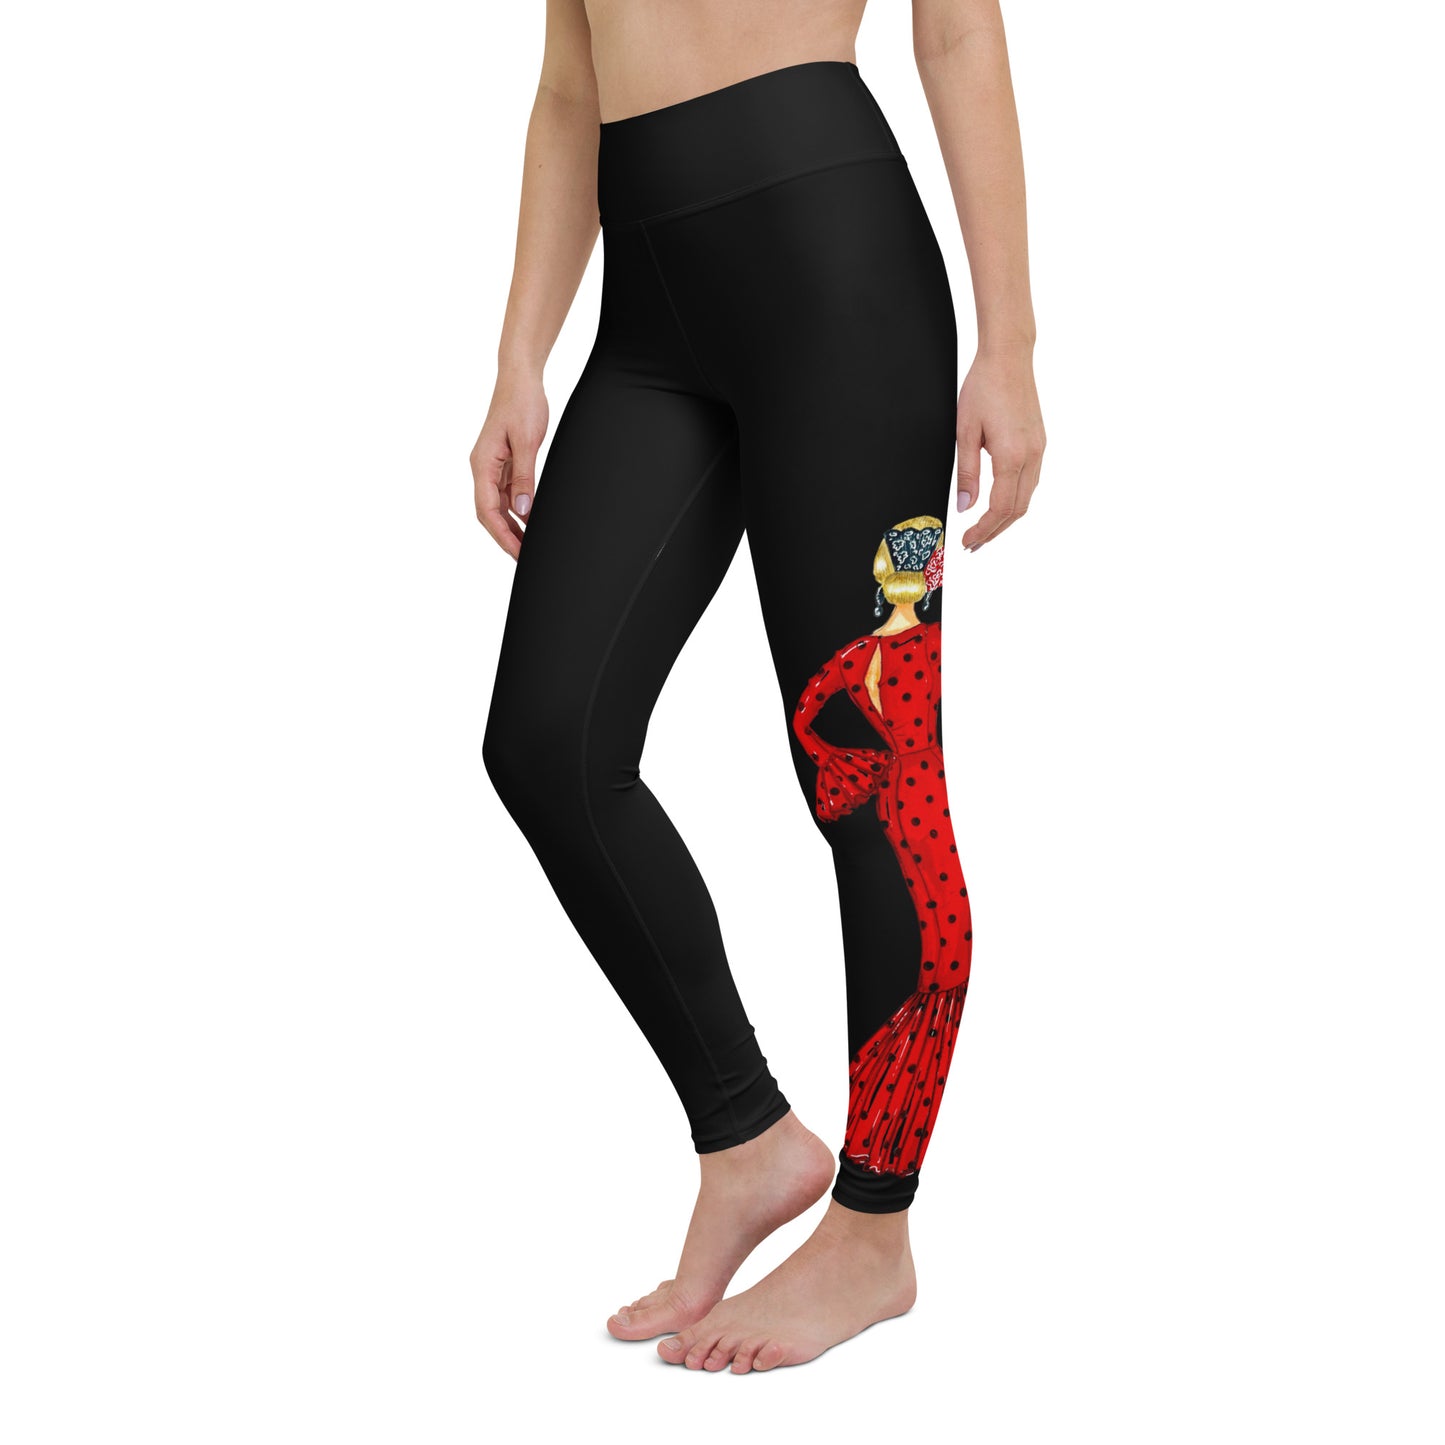 Flamenco Dancer Leggings, black high waisted yoga leggings with a red dress and red heart design - IllustrArte